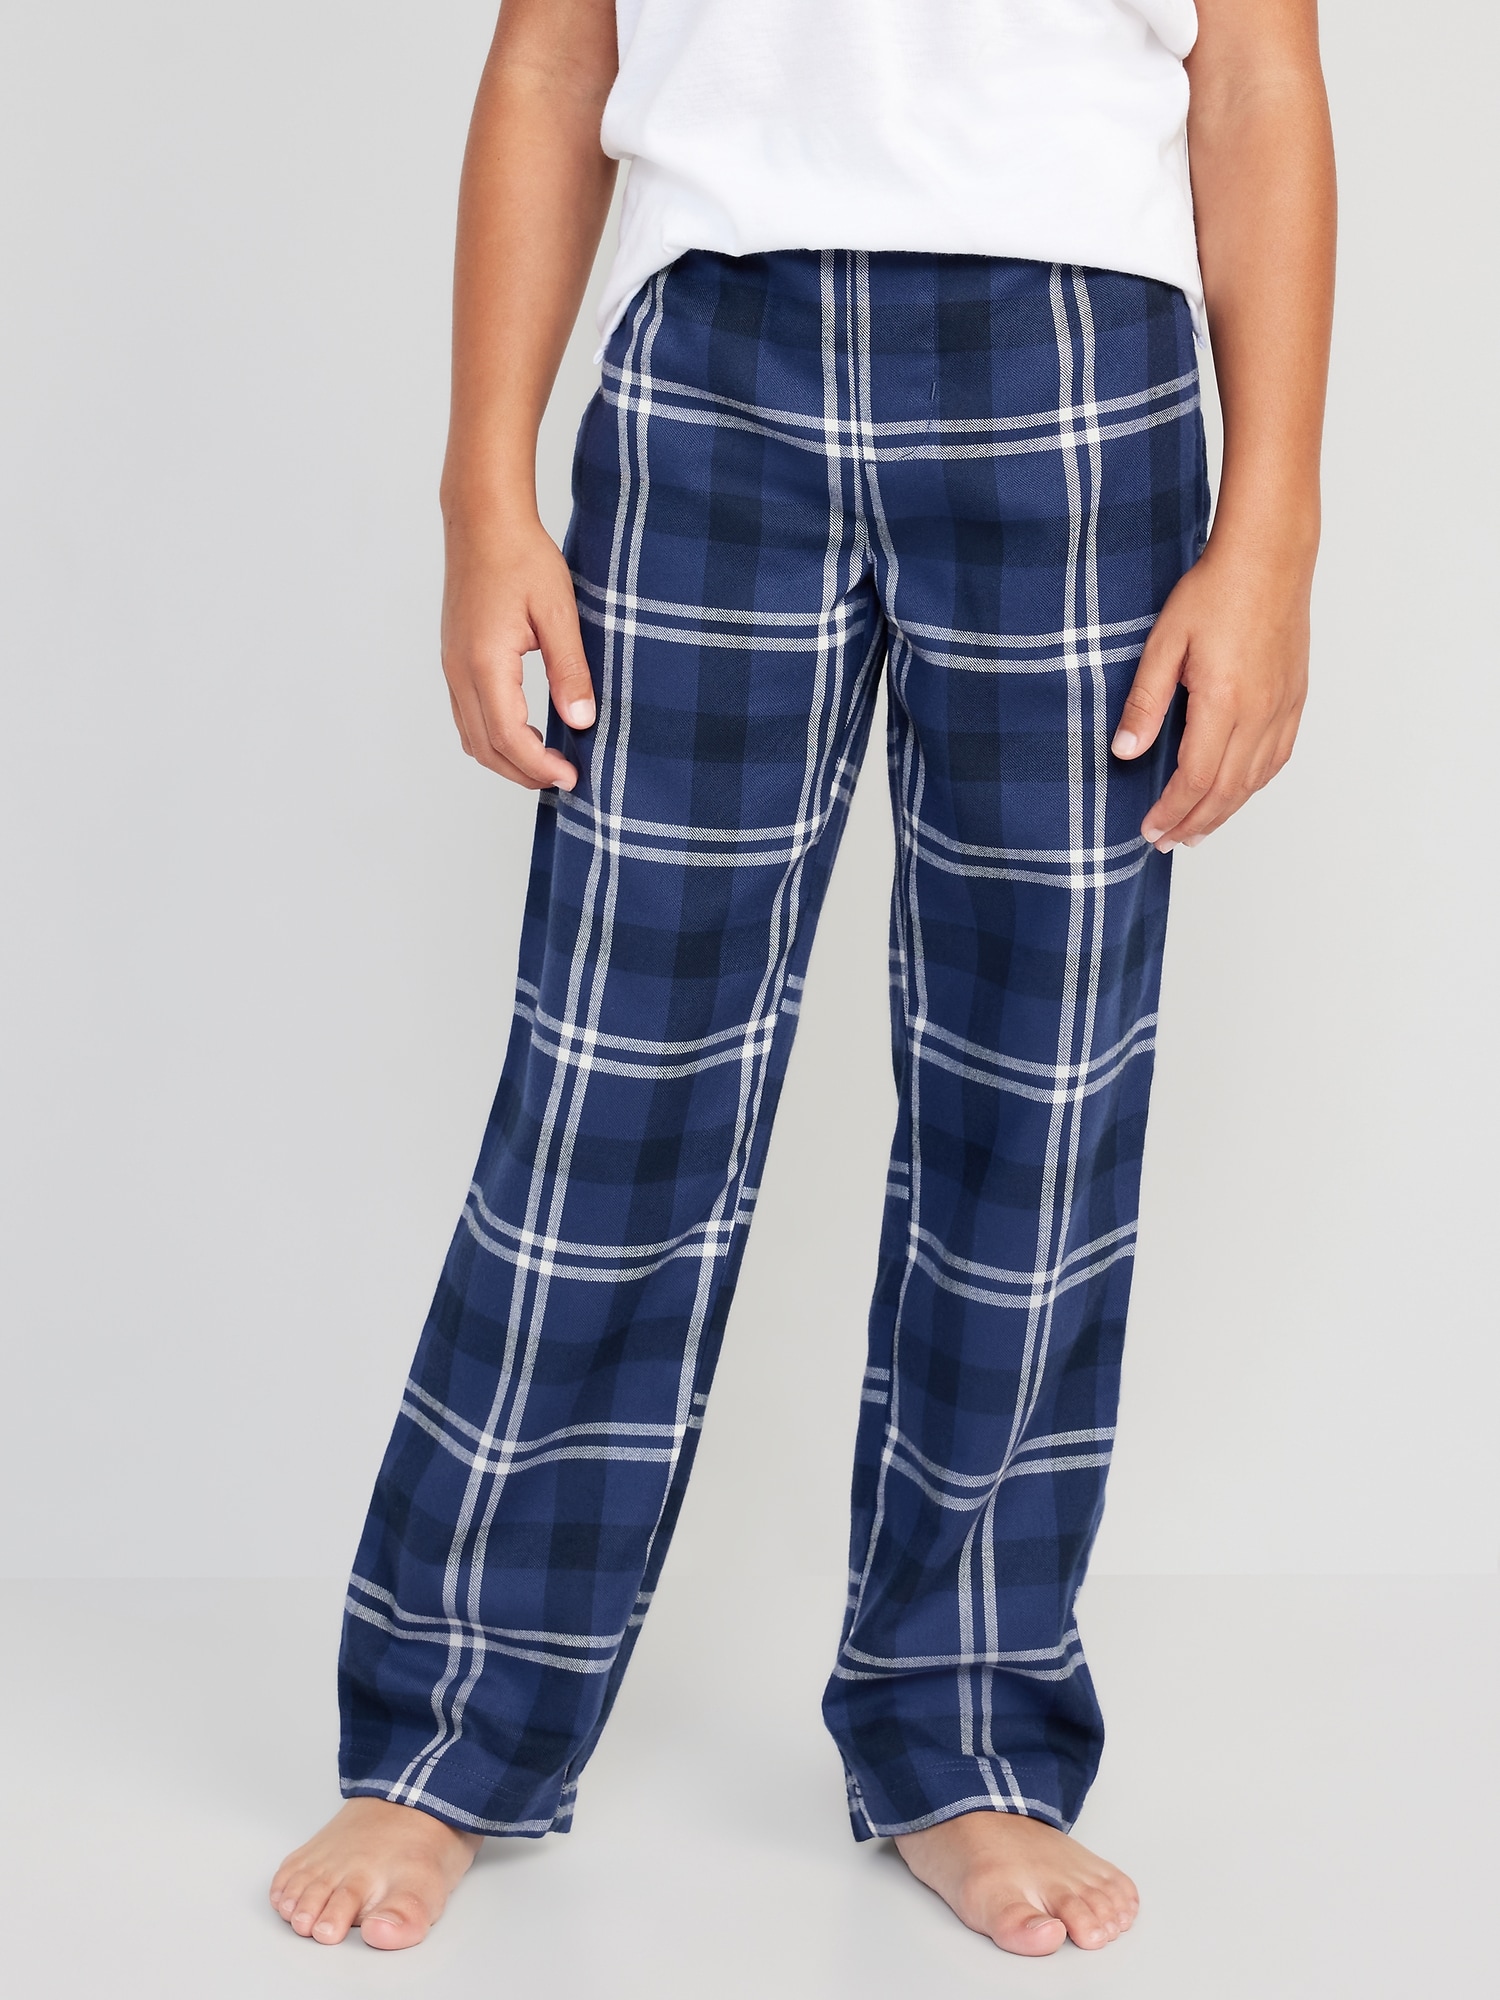 Plaid Flannel Blue or Fuschia Pajama Pants